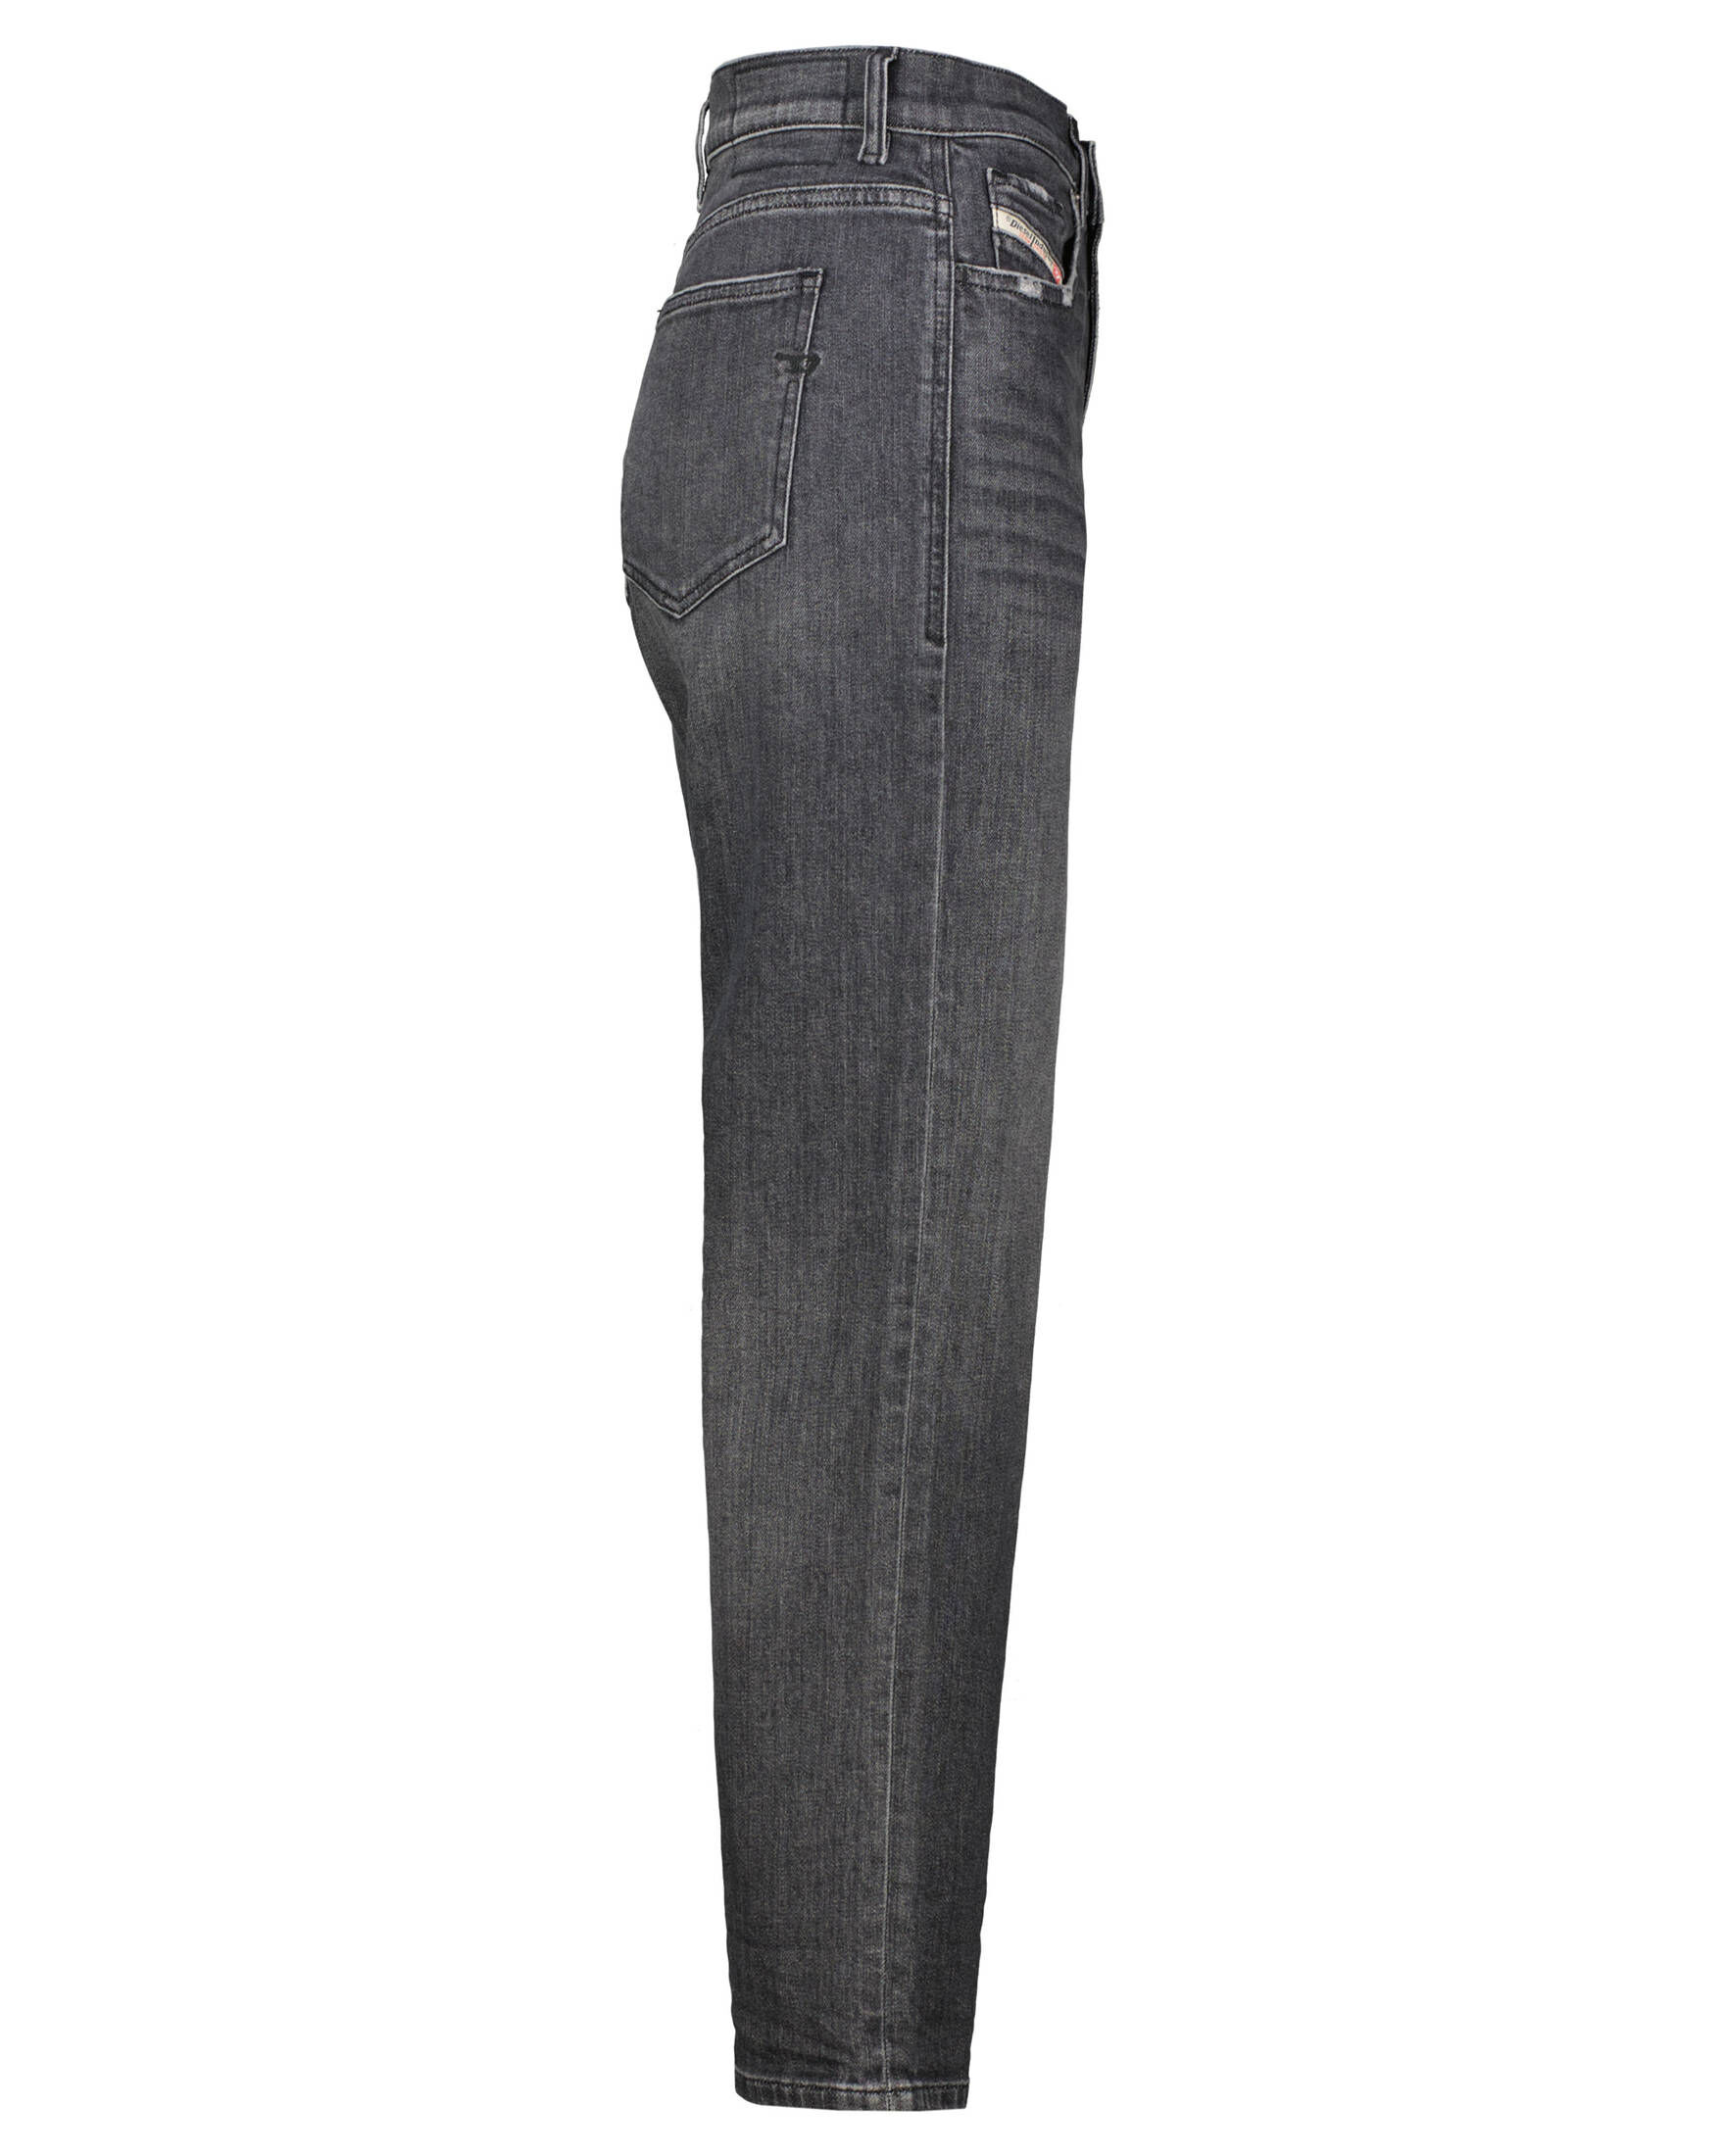 hoe te gebruiken Missend Gooi Diesel Damen Jeans 2016 D-AIR Regular Fit kaufen | engelhorn